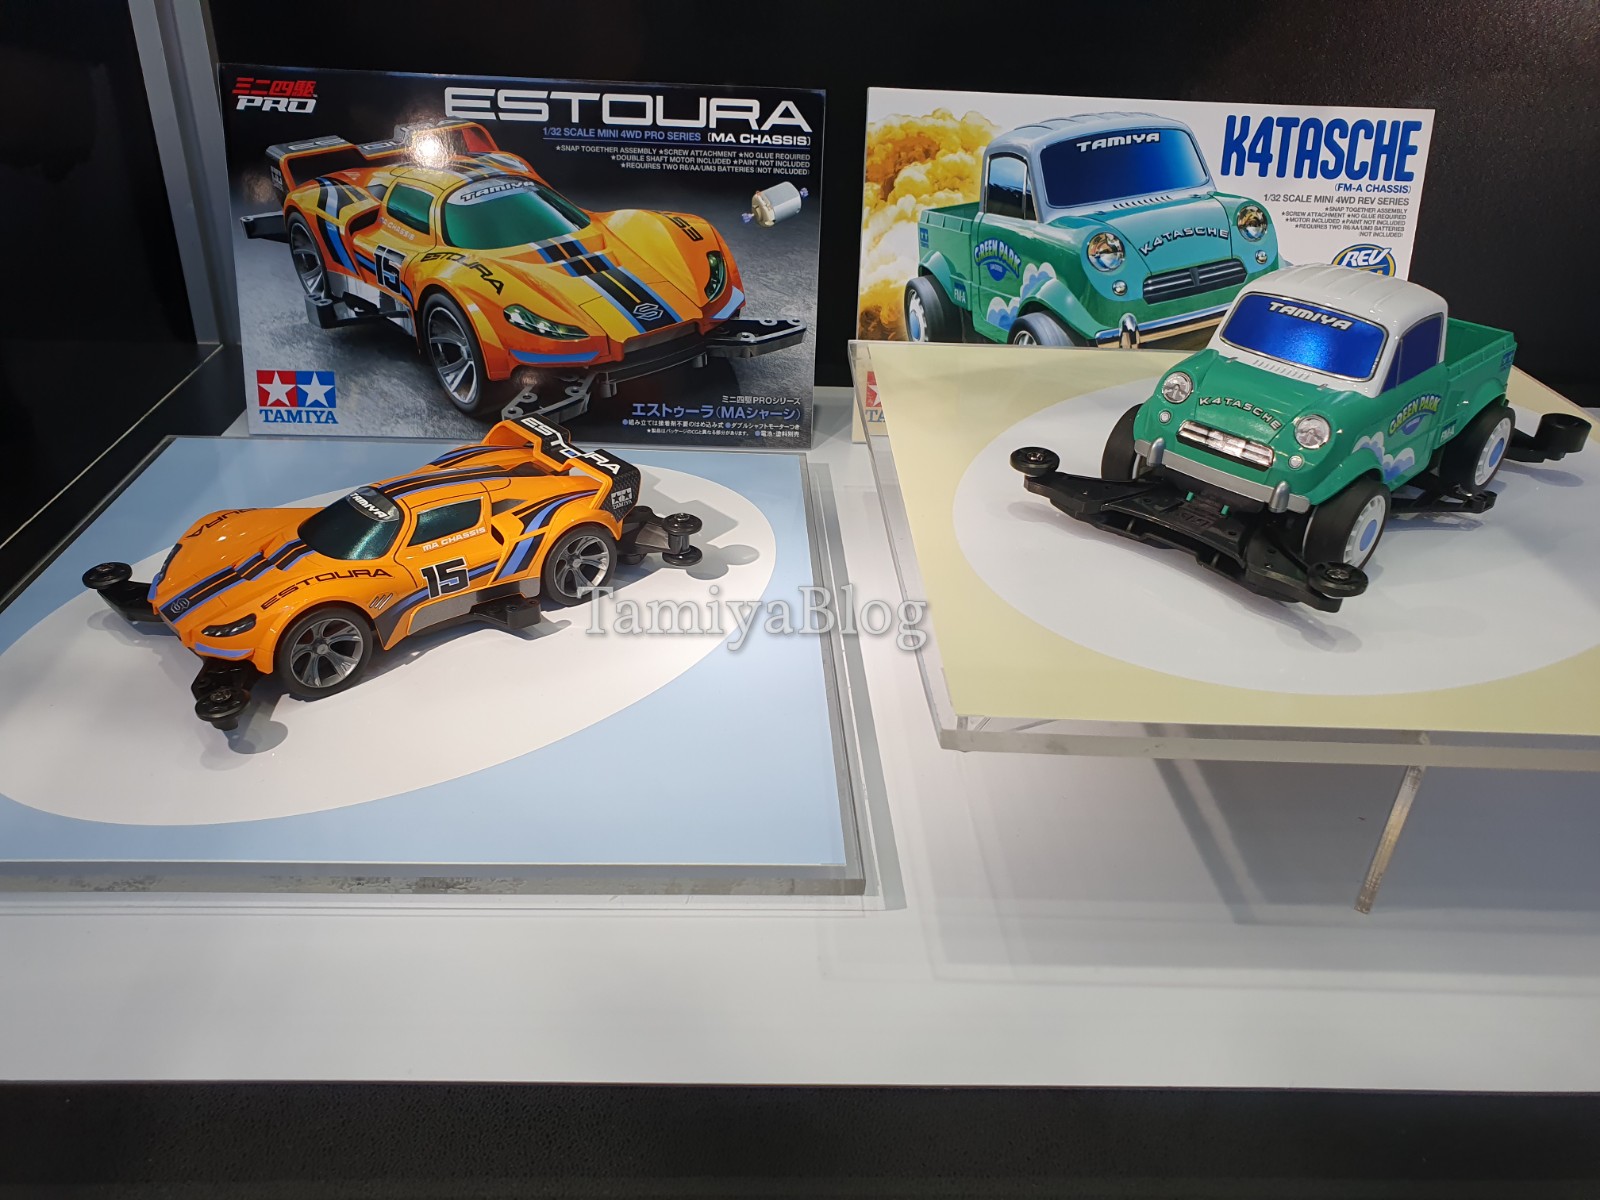 New Tamiya Mini 4WD and Educational series shown at the Nuremberg